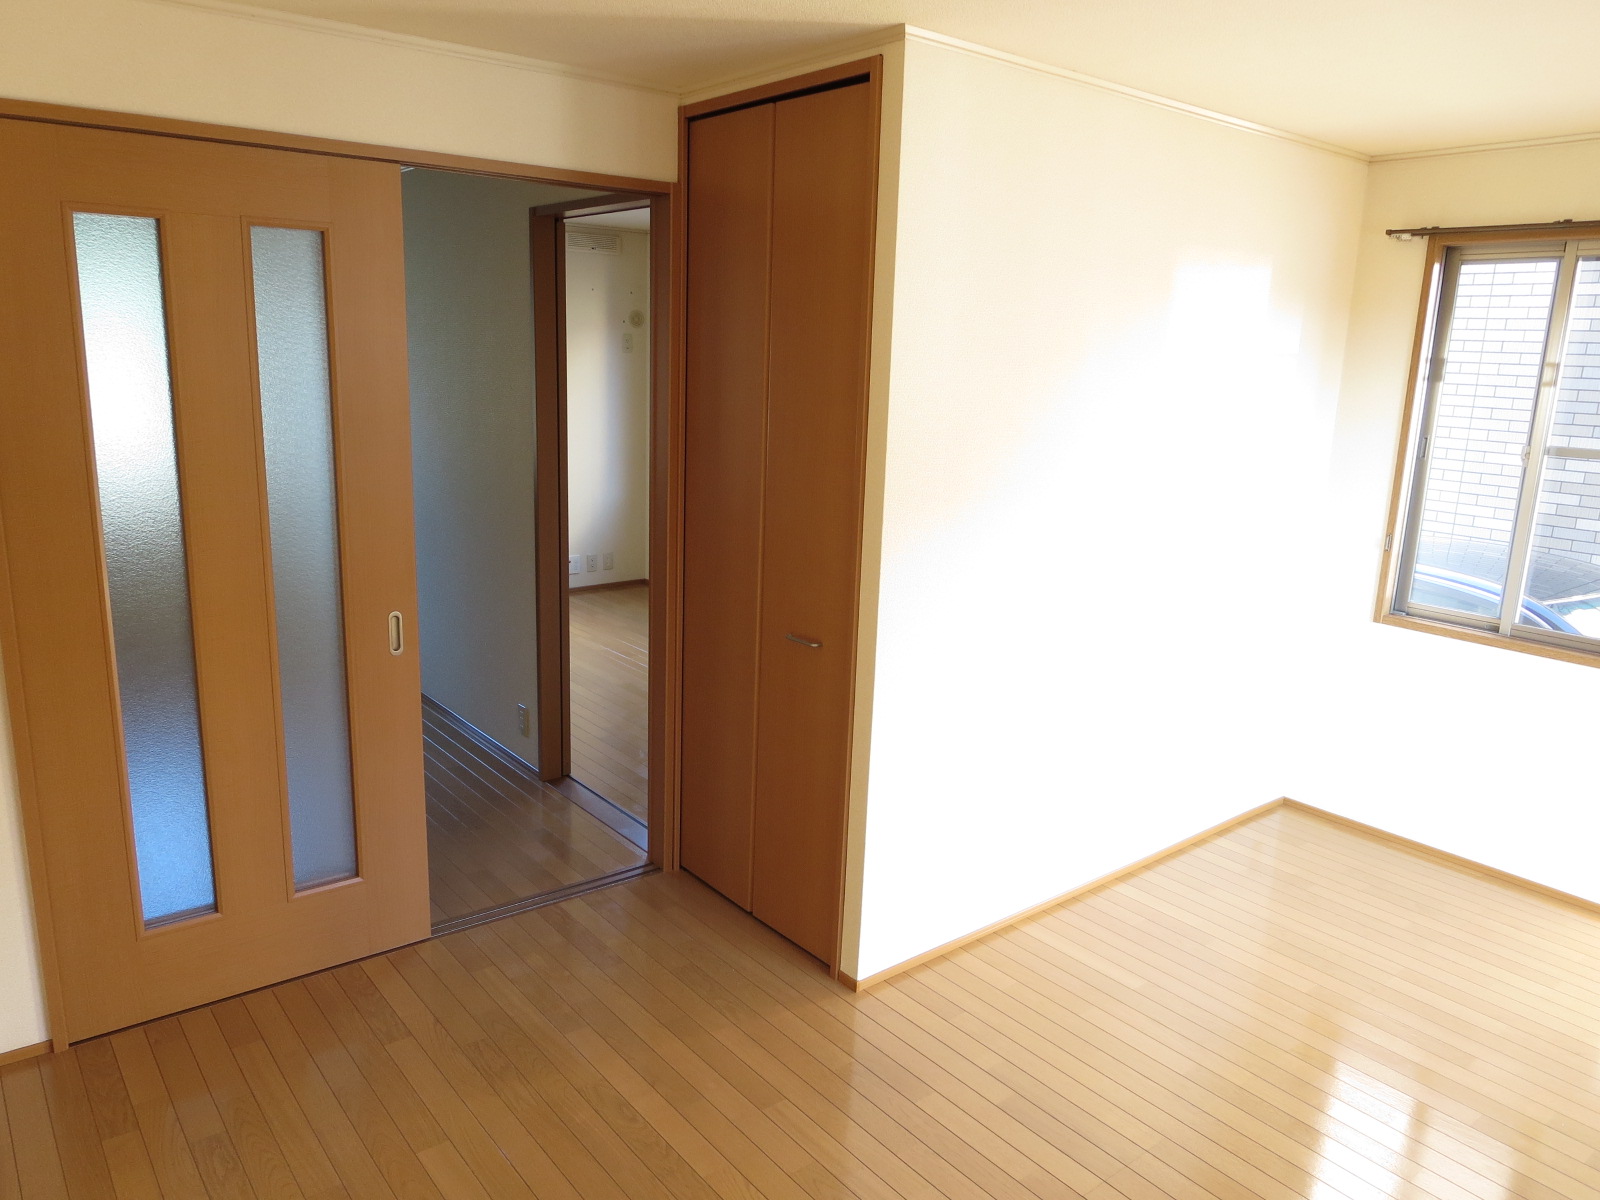 Living and room. Woodgrain door of the black set of living